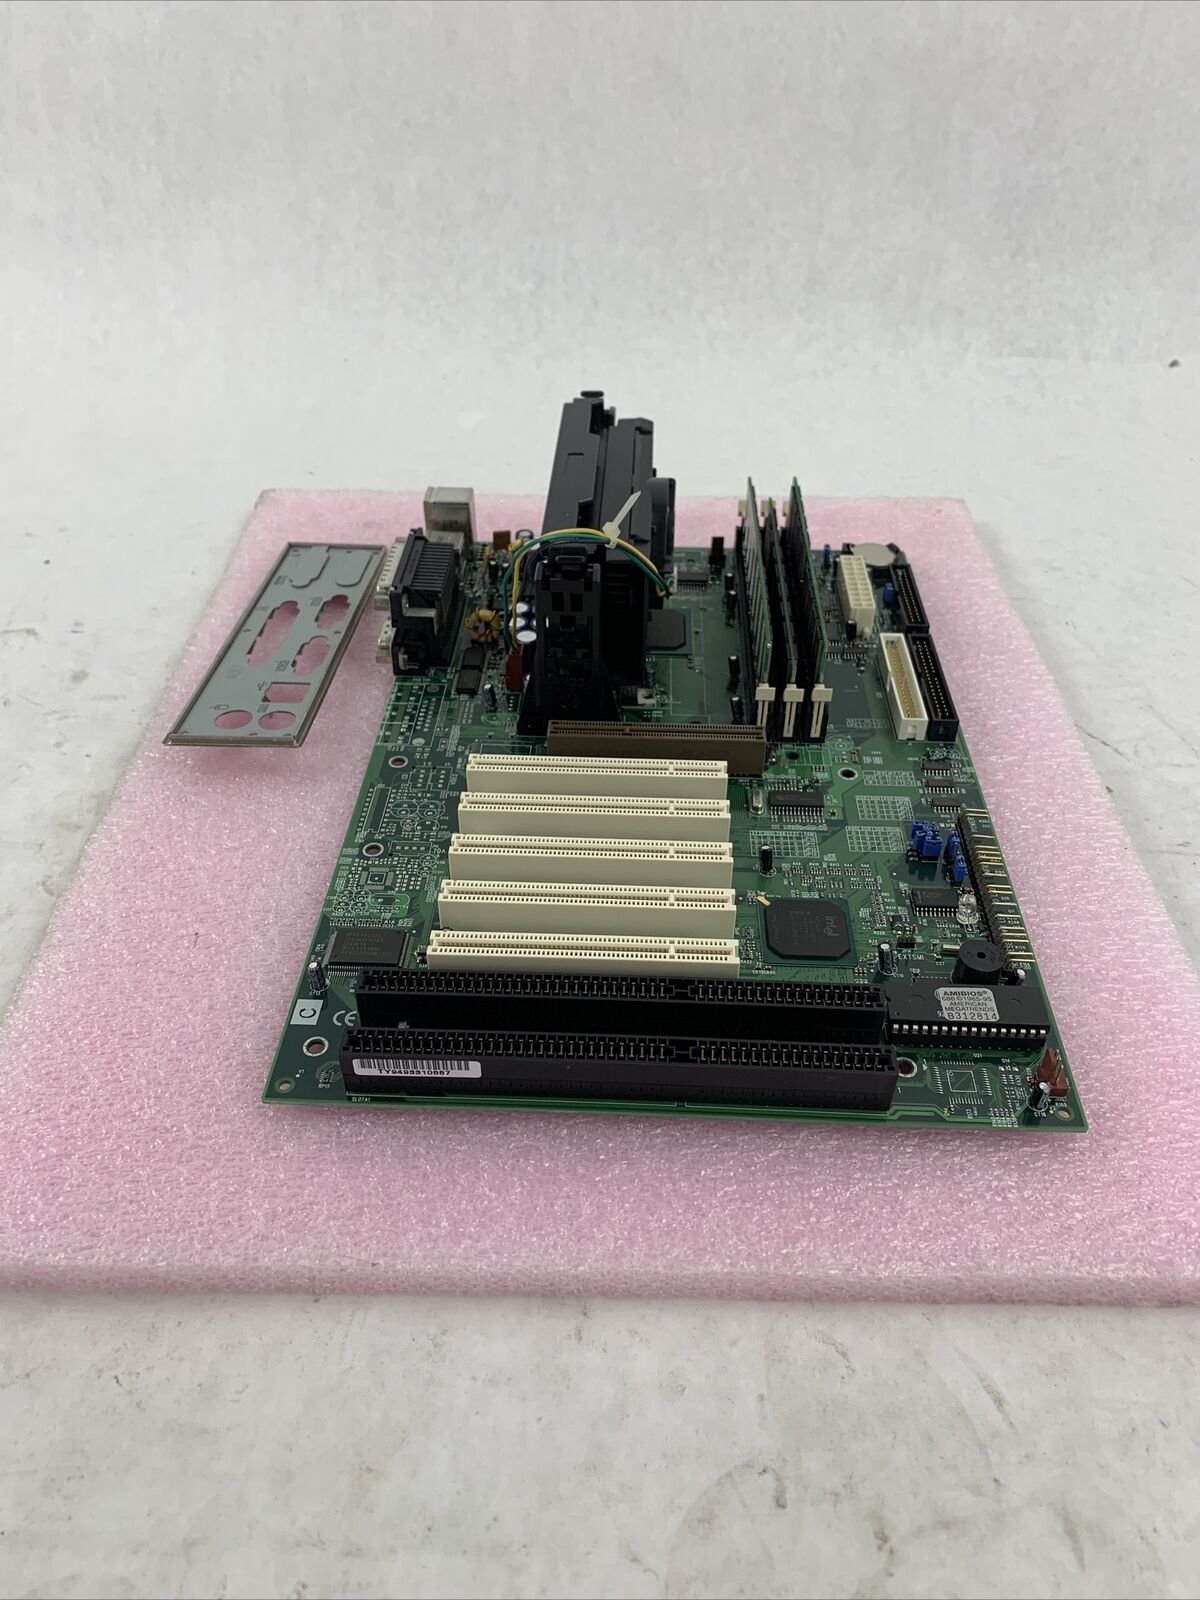 Tyan S1848 Motherboard Intel Pentium III 450MHz 416MB RAM 2x ISA w/ I/O Shield